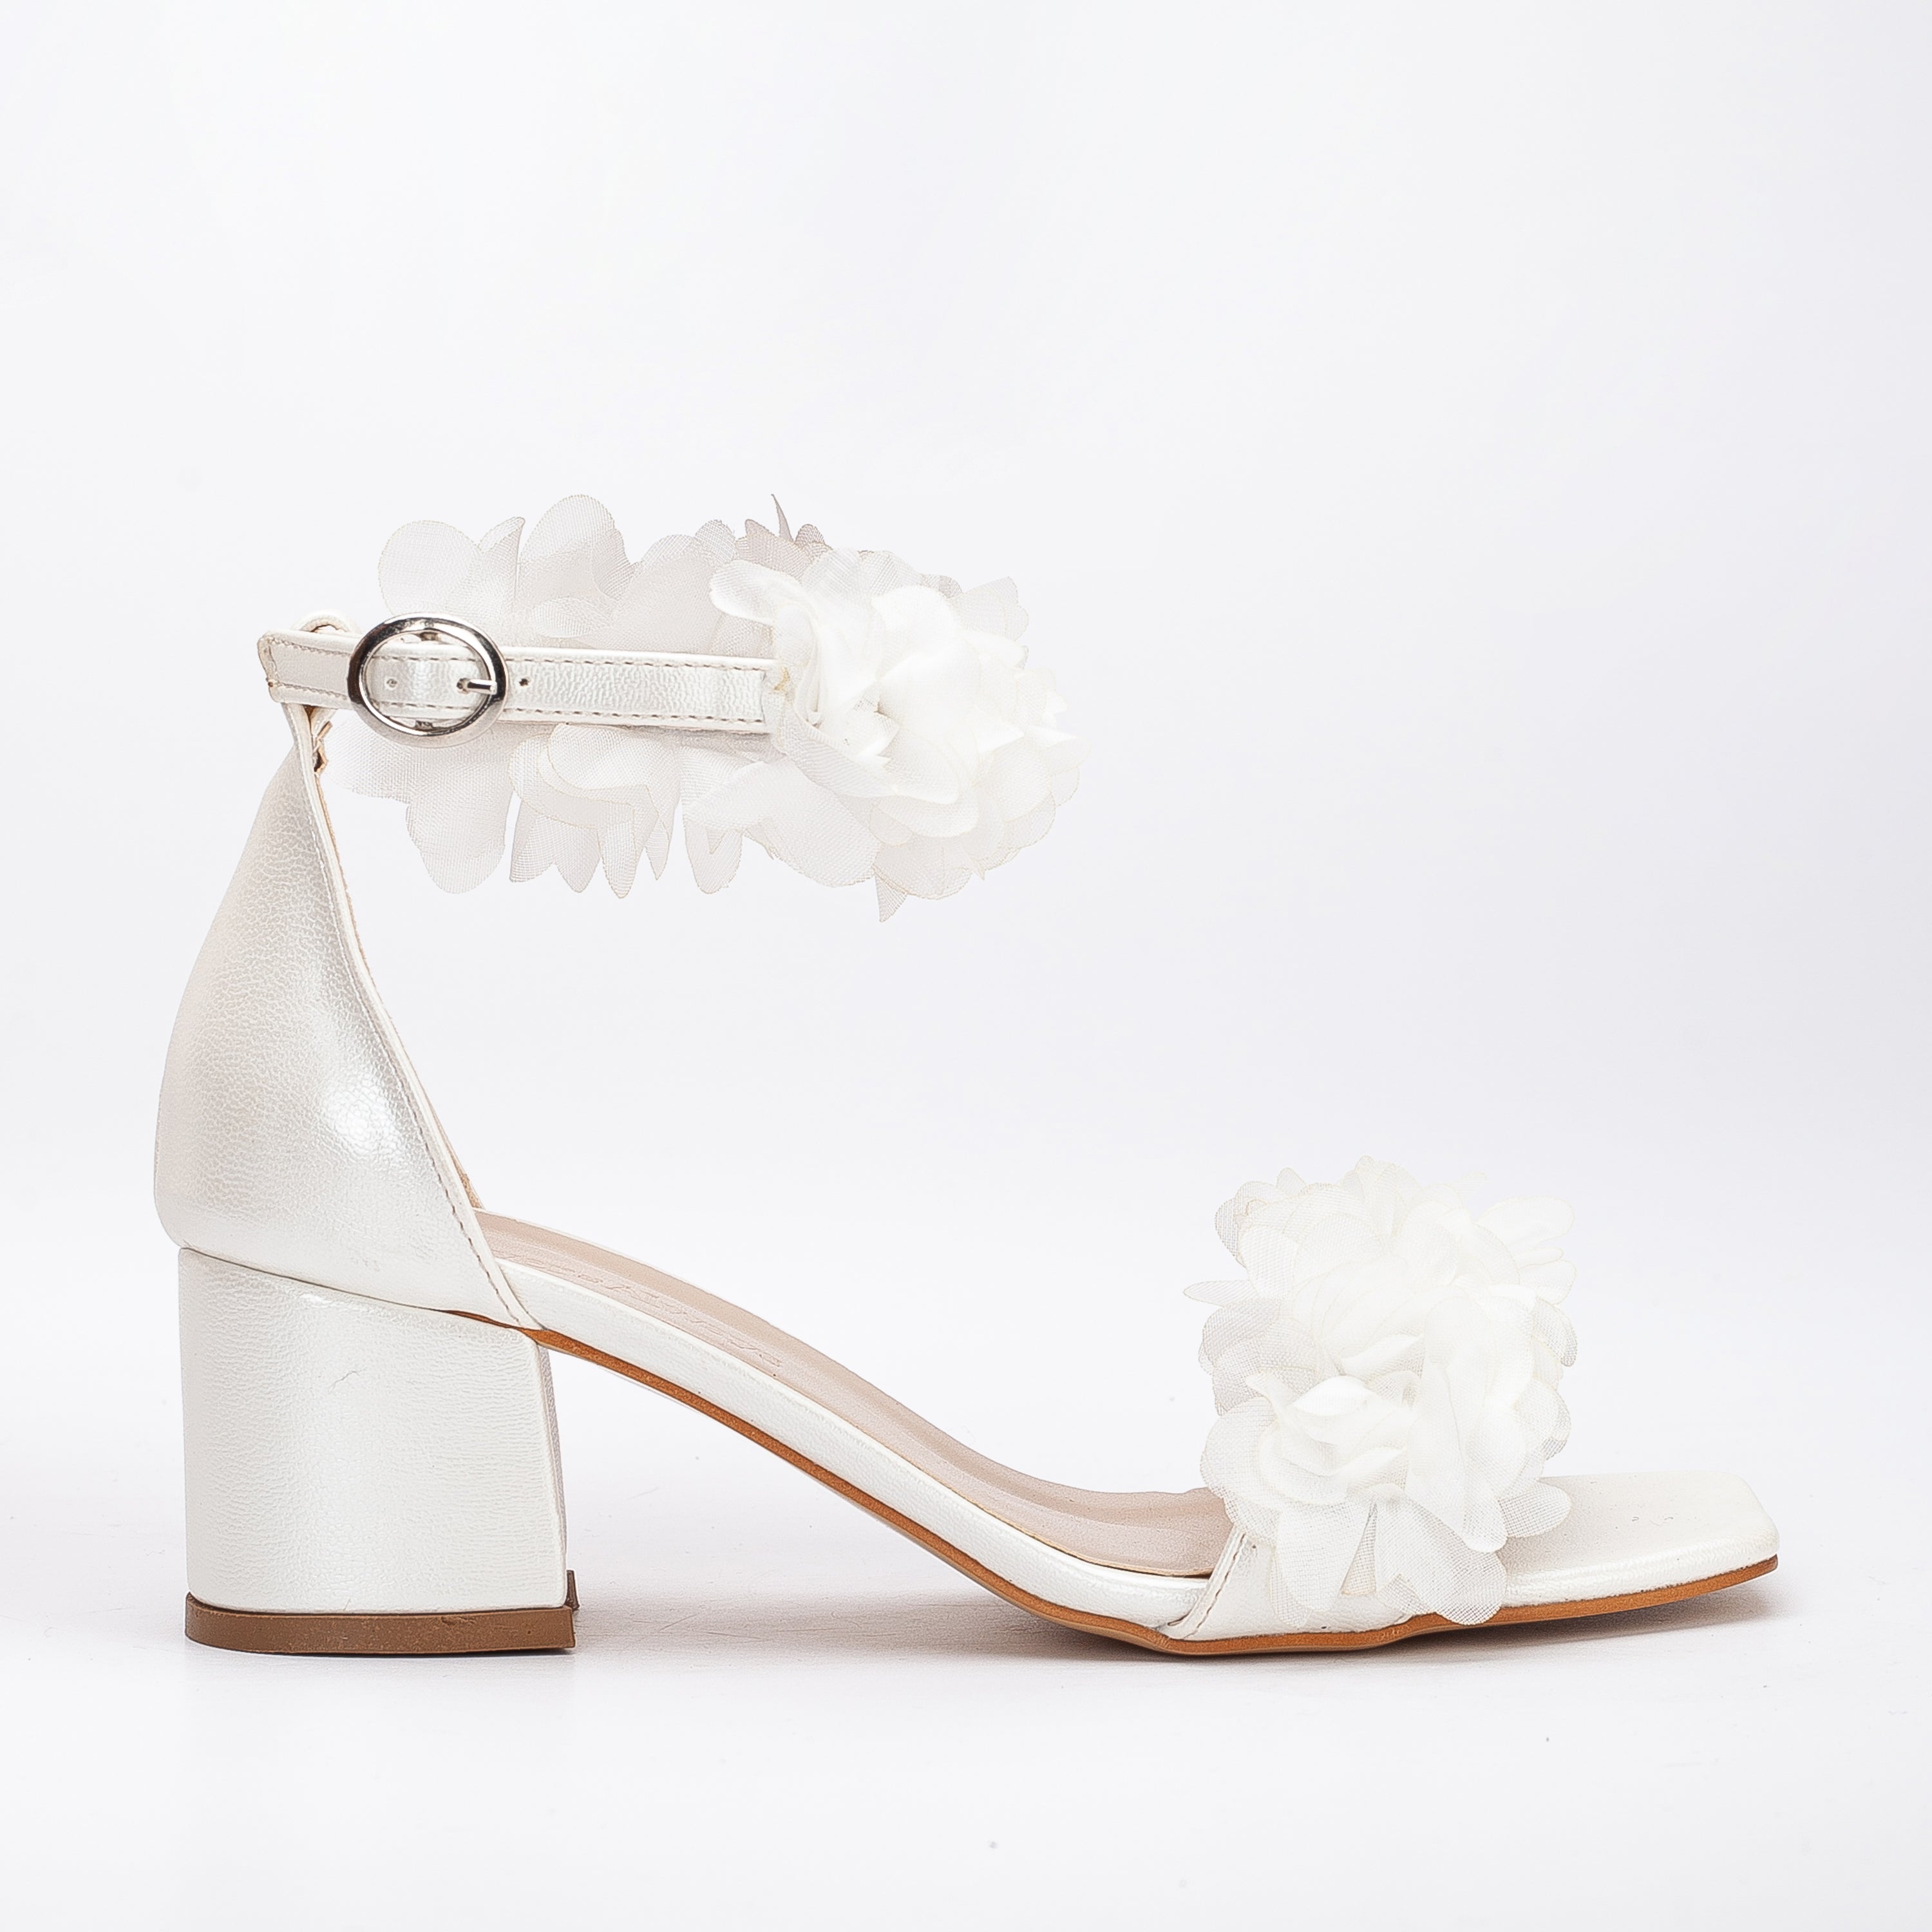 White Wedding Shoes, Bridal Shoes, Block Heels, Lace Wedding Shoes, White Heels, White Bride Shoes, Wedding Shoes, White Low Heel Shoes